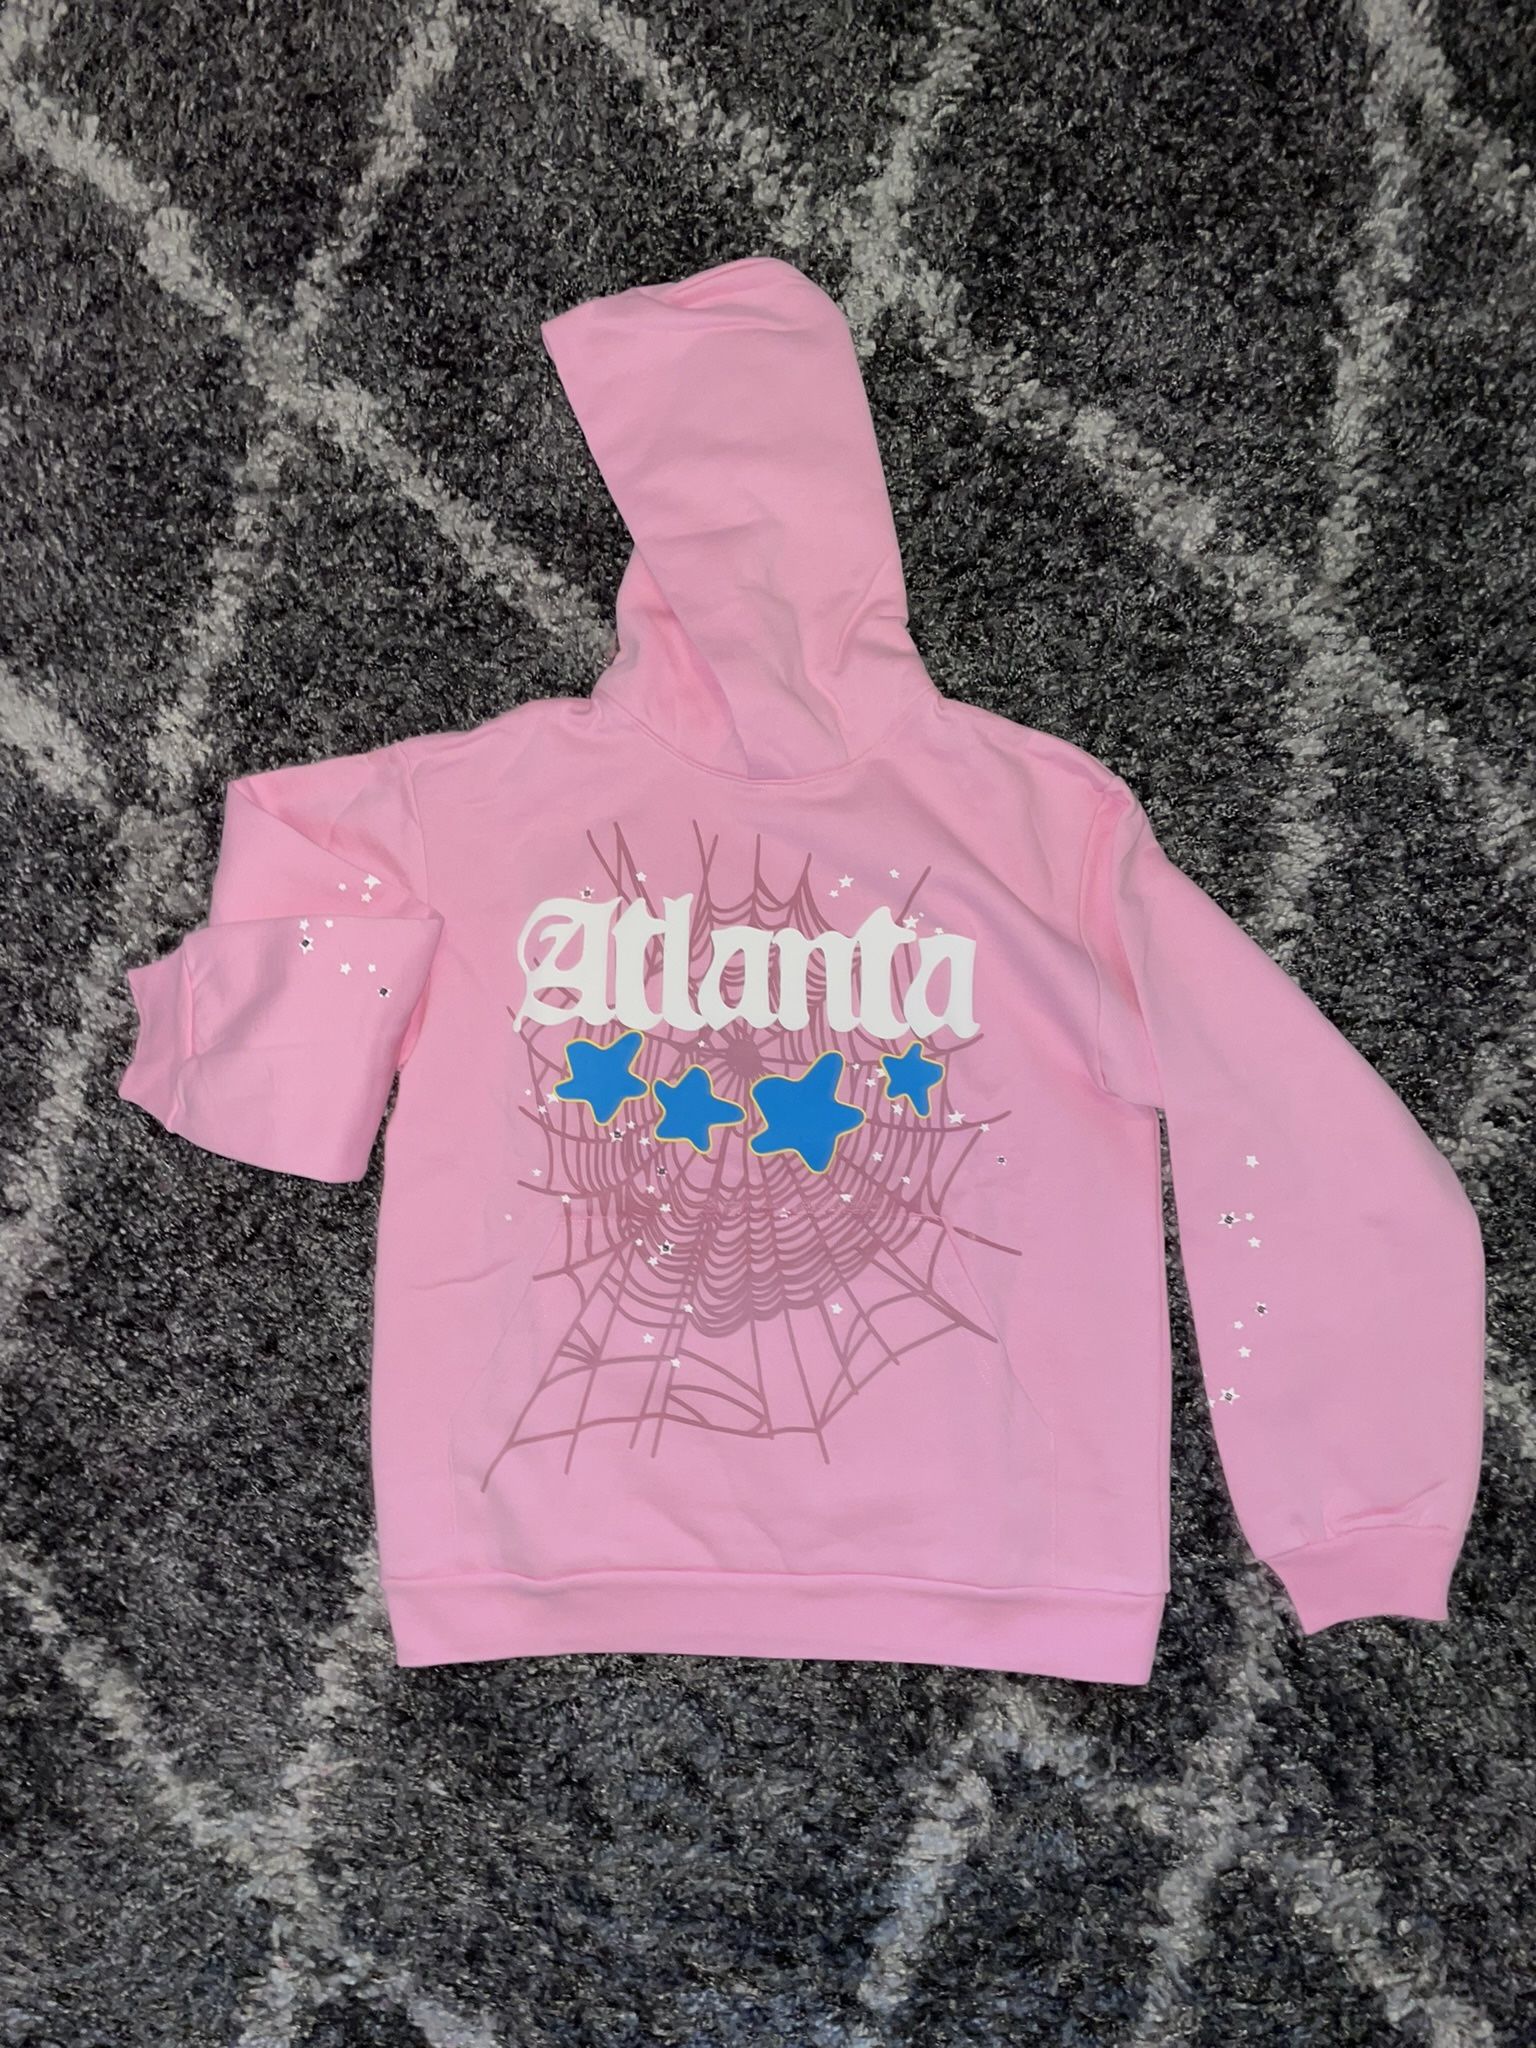 Sp5der Atlanta Pink Hoodie - Size M